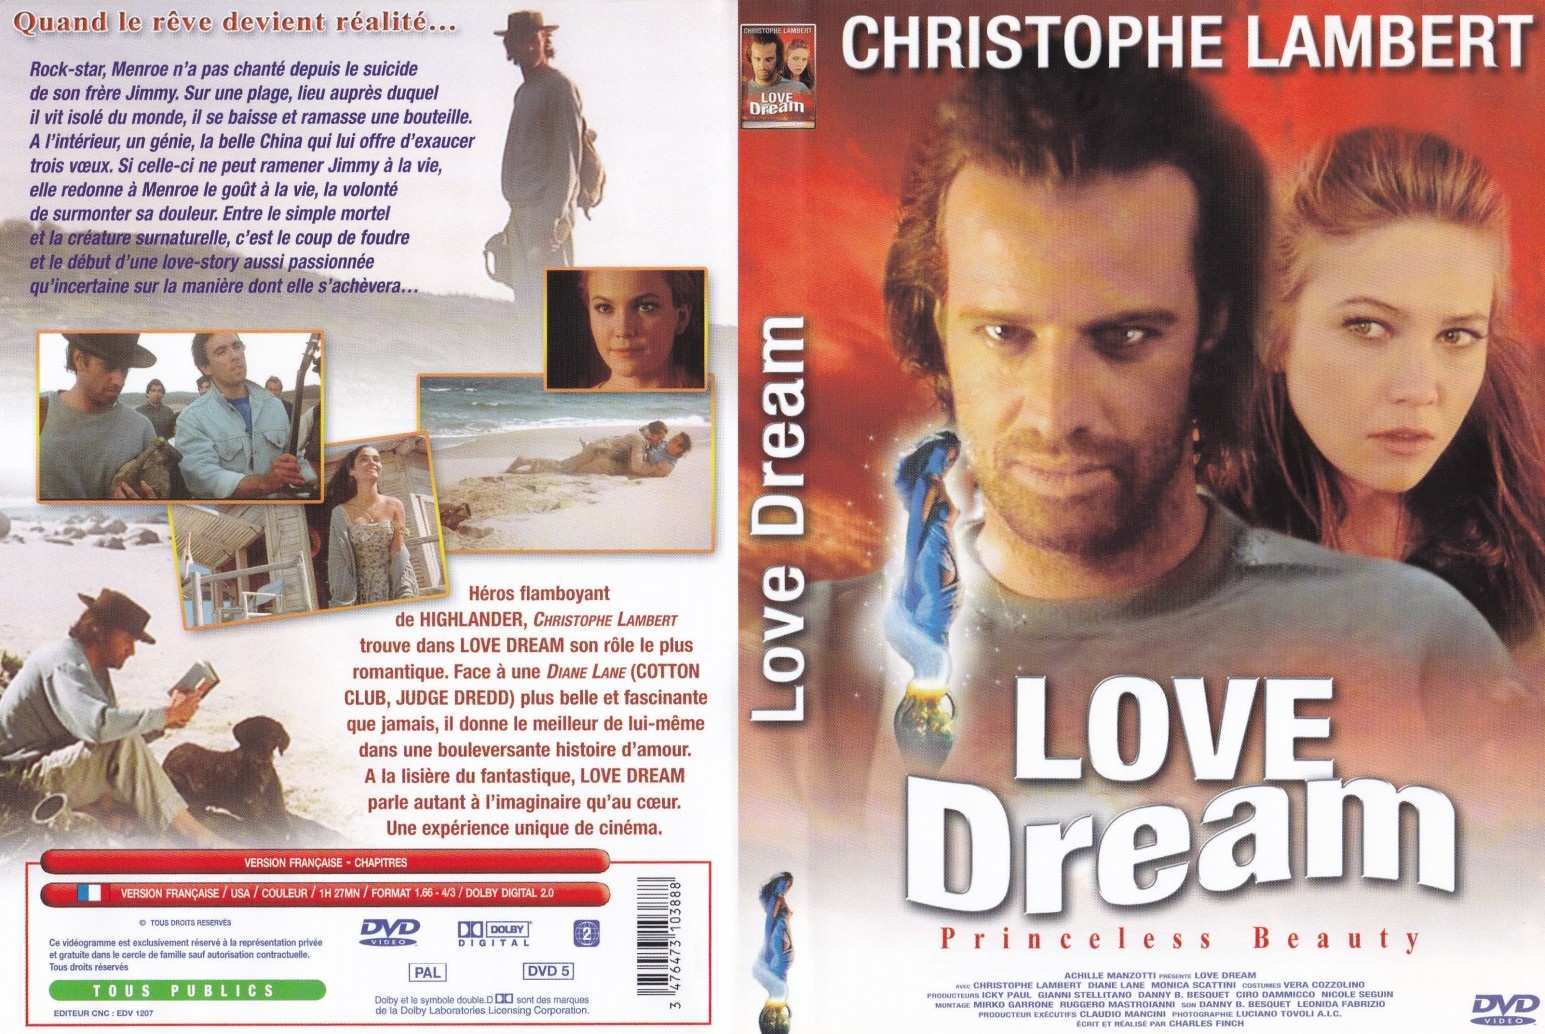 Jaquette DVD Love Dream